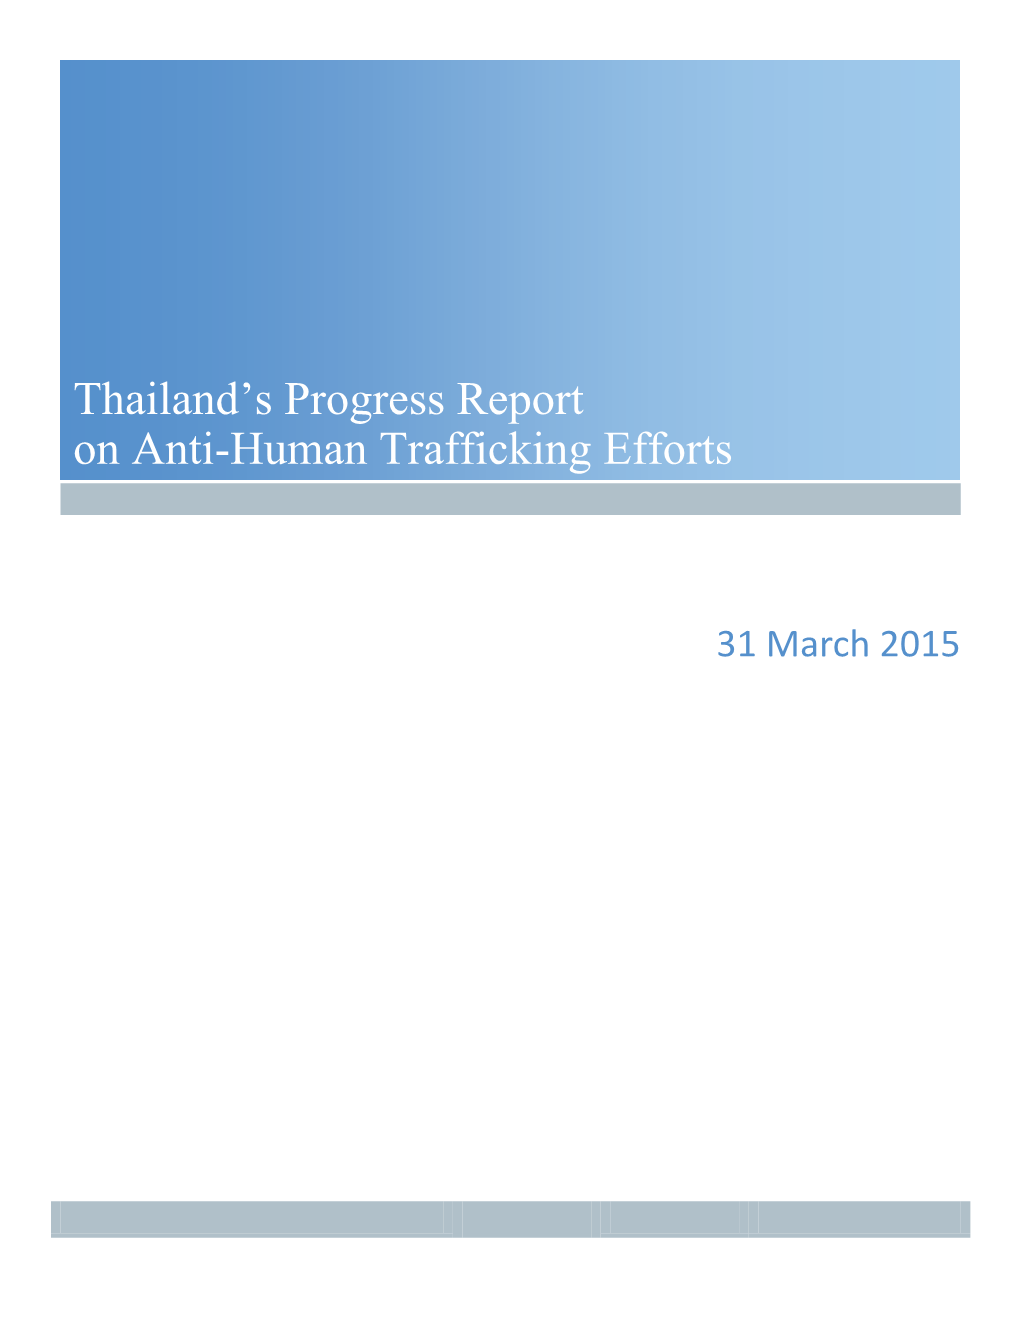 Thailand's Progress Report on Anti-Human Trafficking Efforts